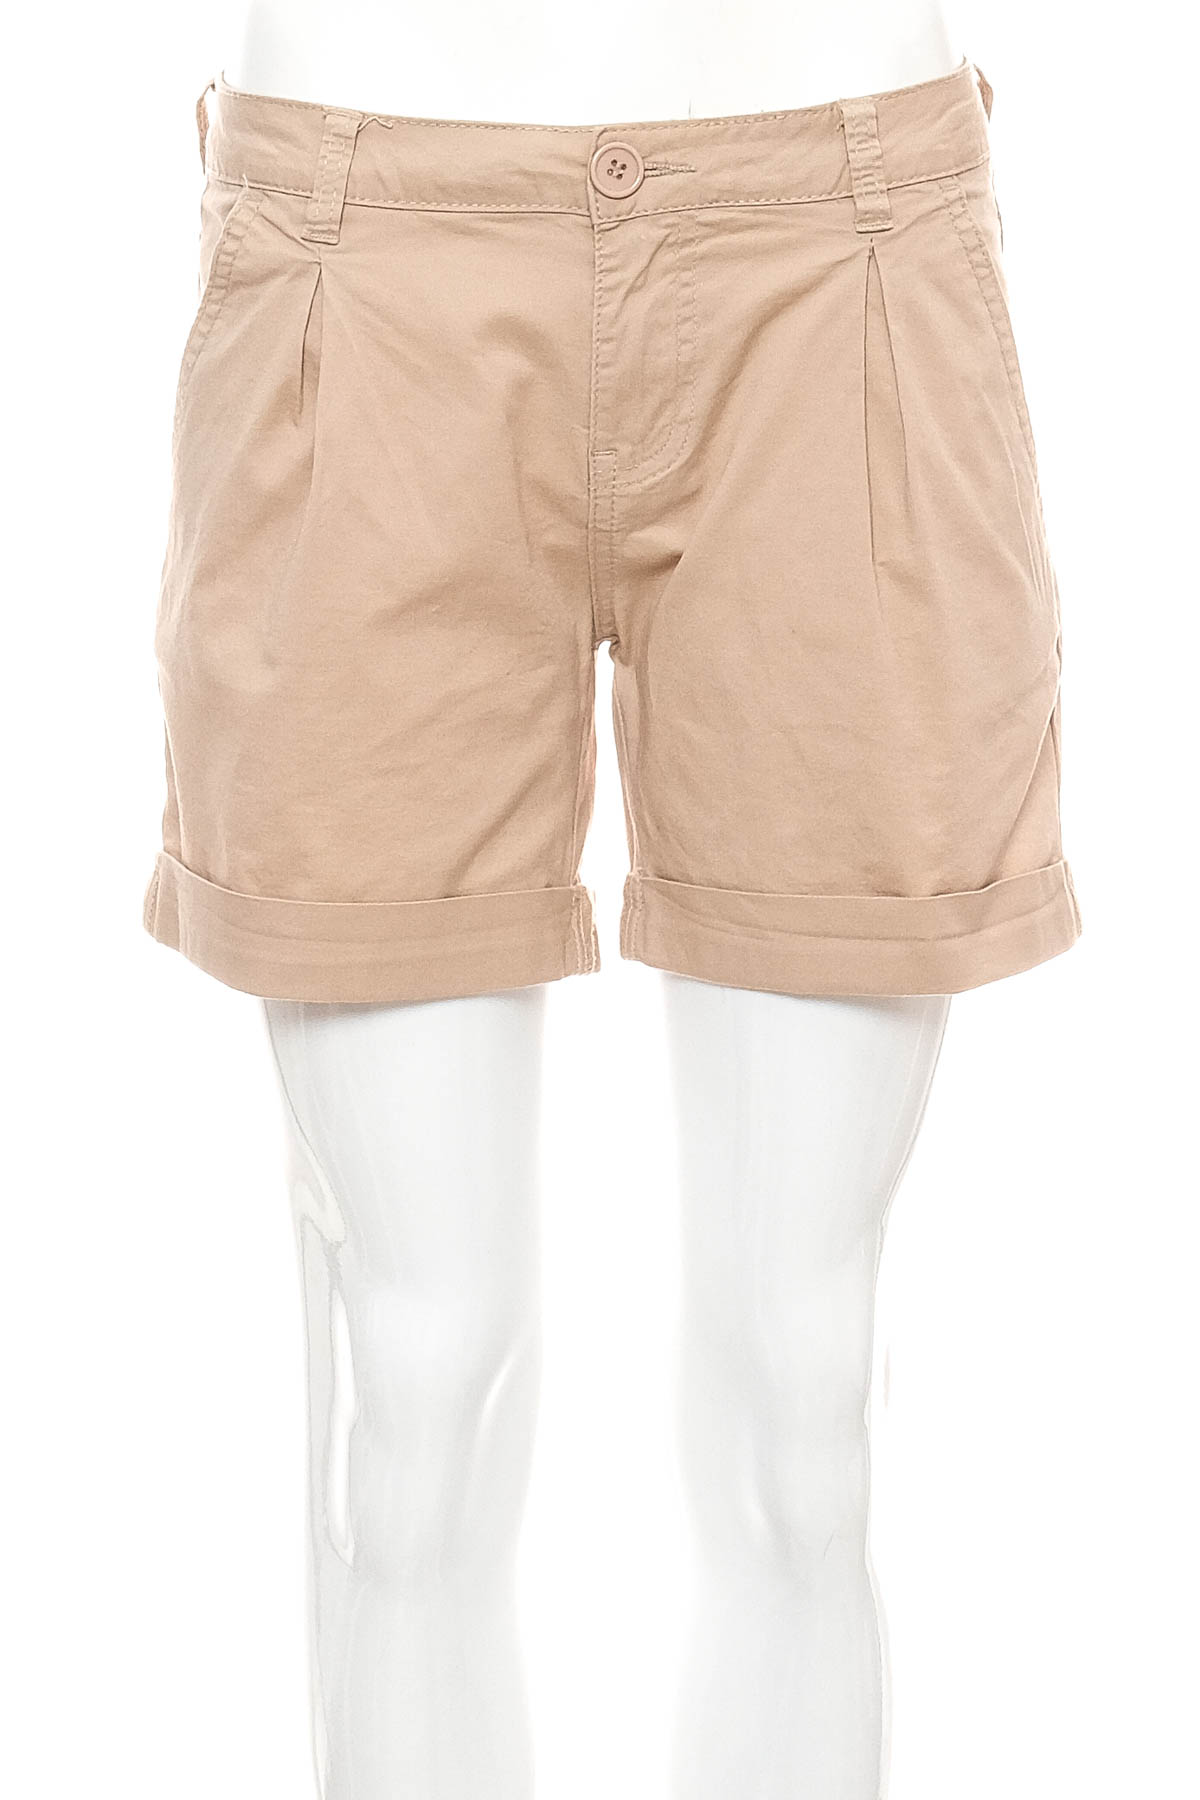 Female shorts - Zalando essentials - 0